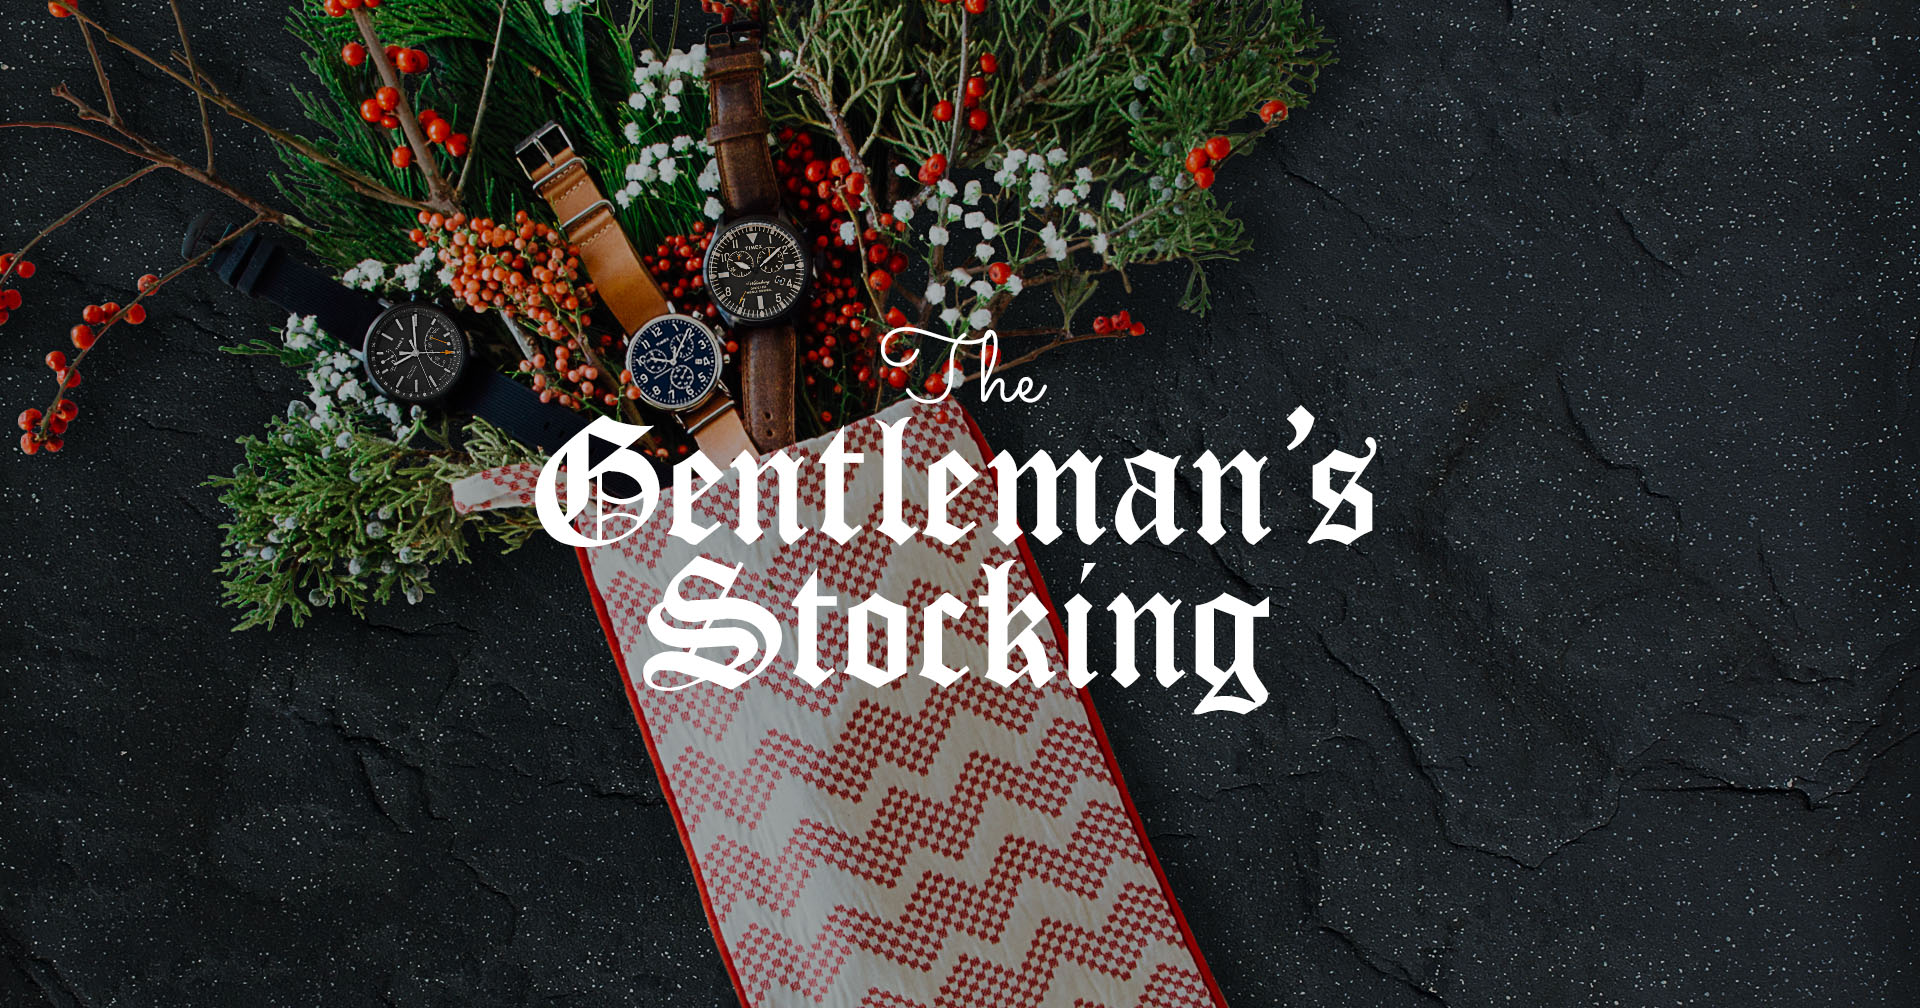 Gentleman’s Stocking